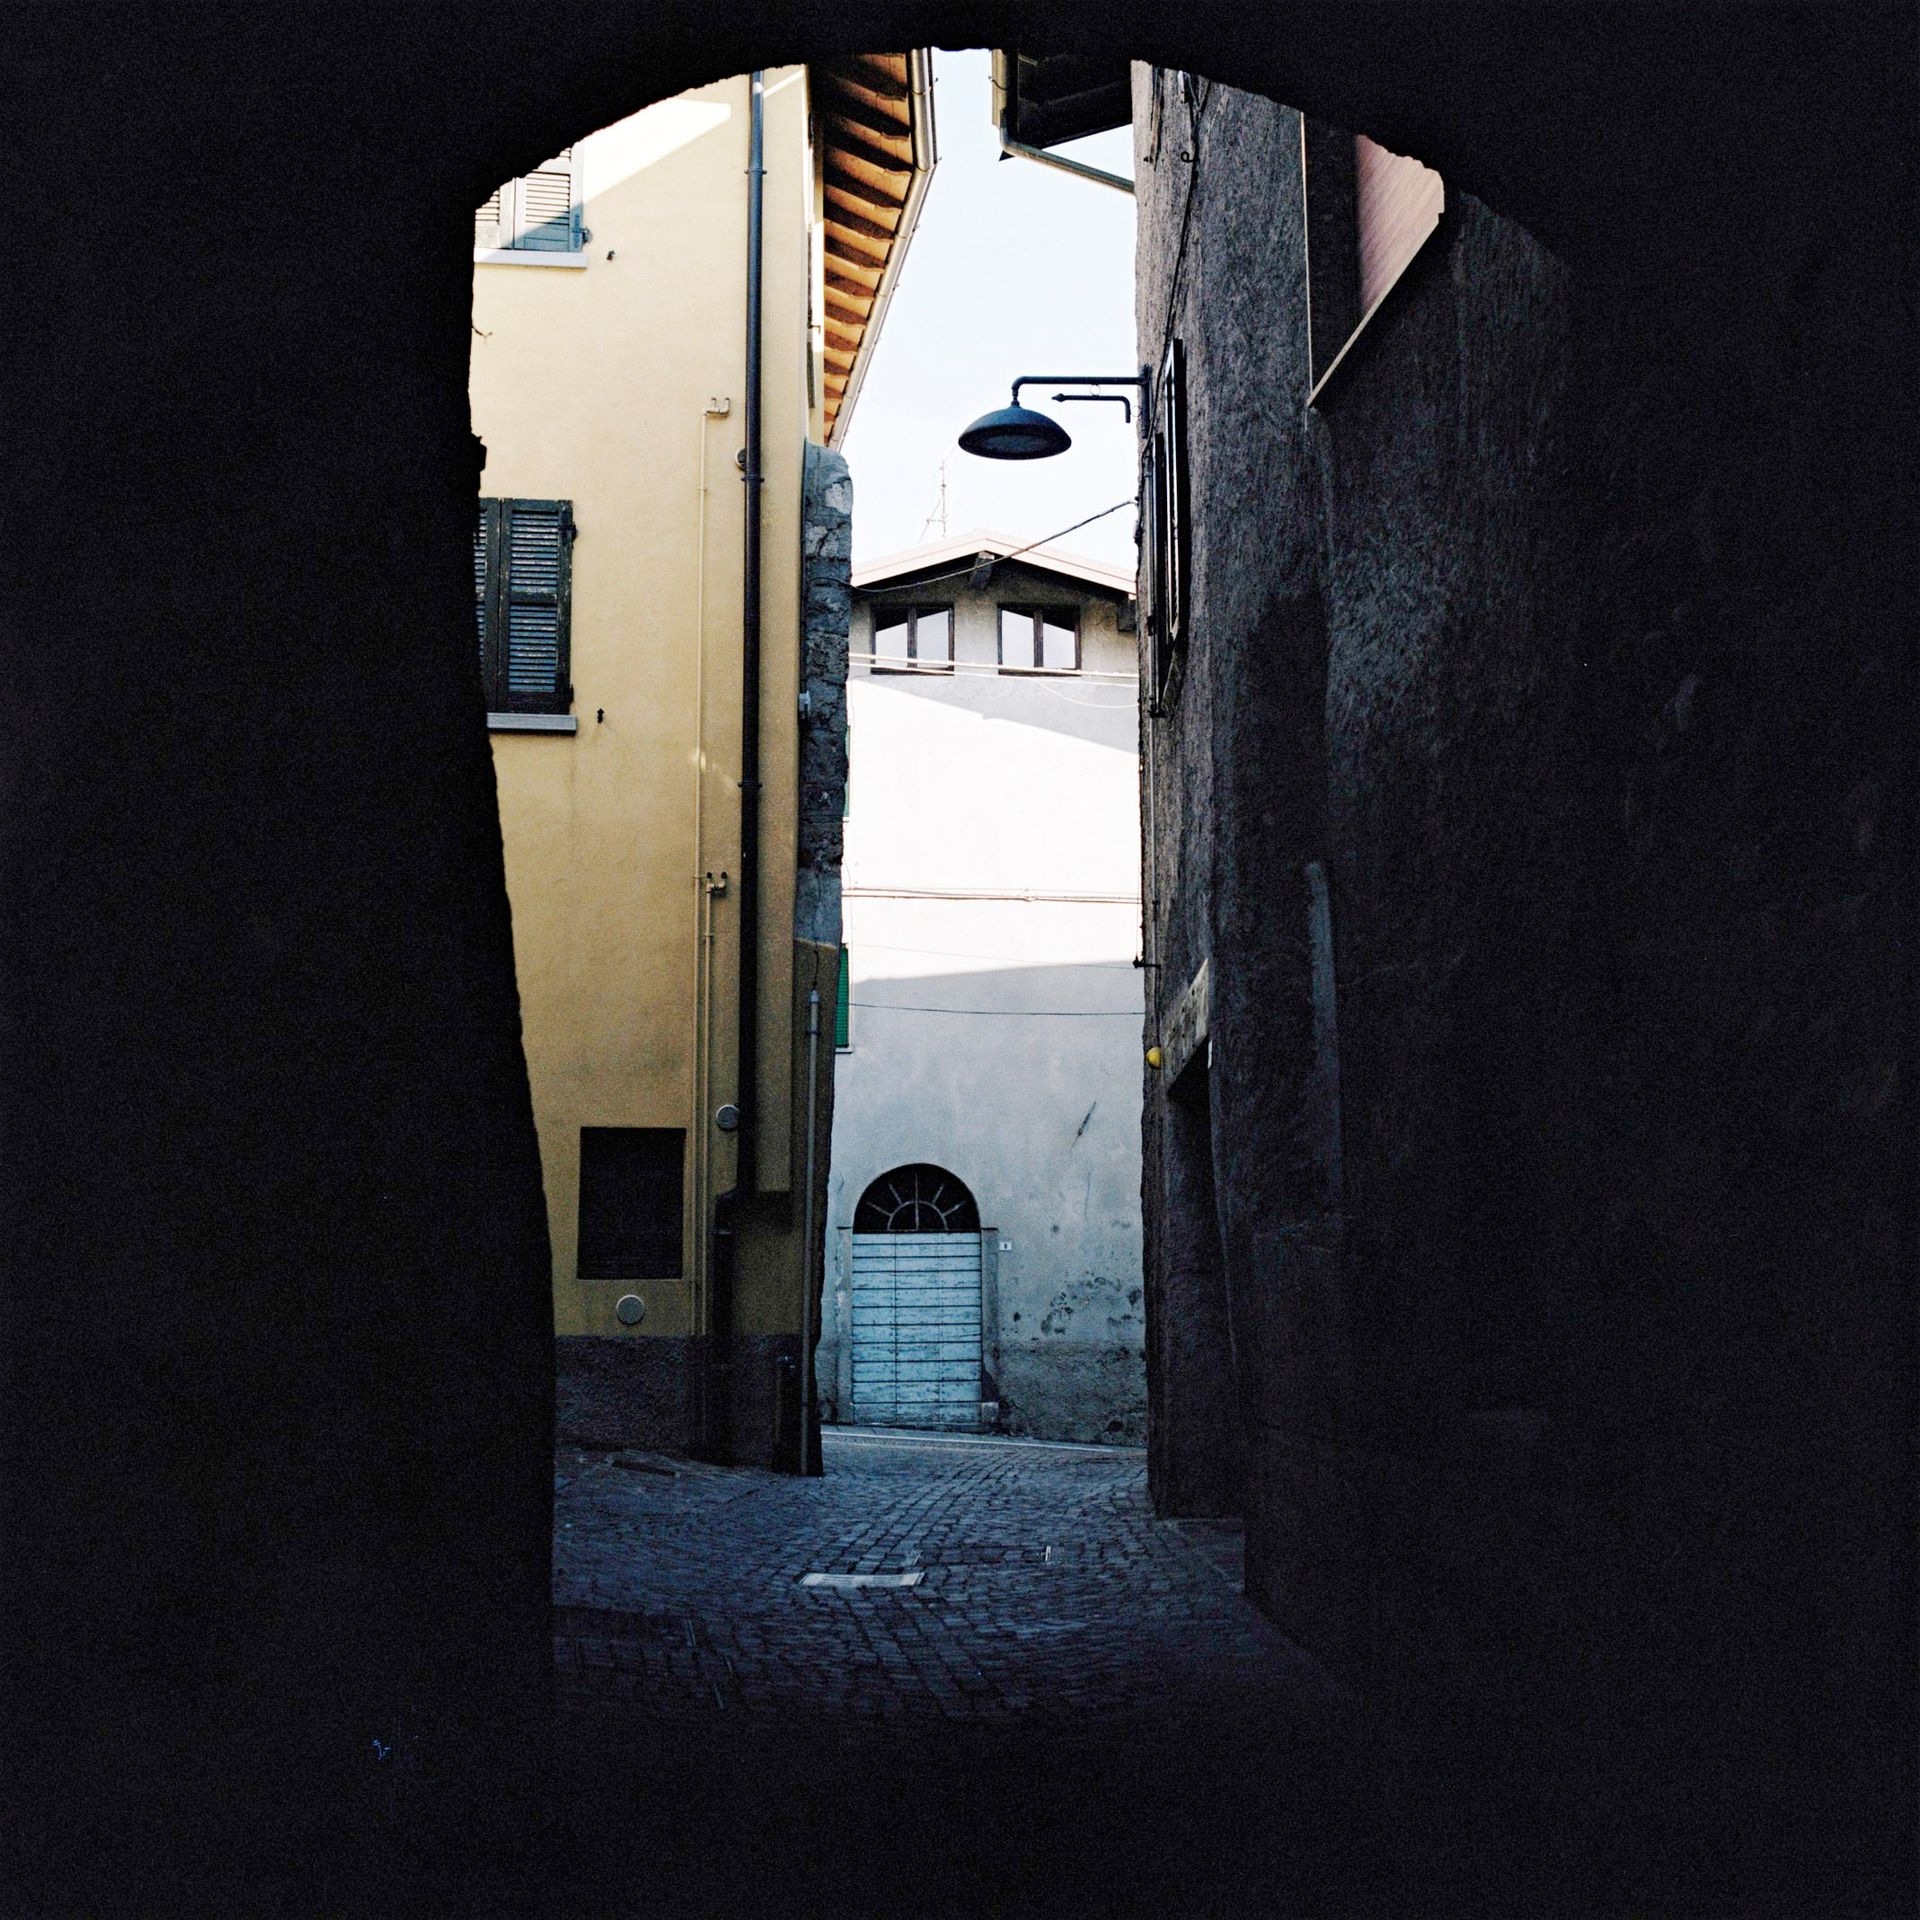 strada di paese in Italia. street photo by Mariano Herrera